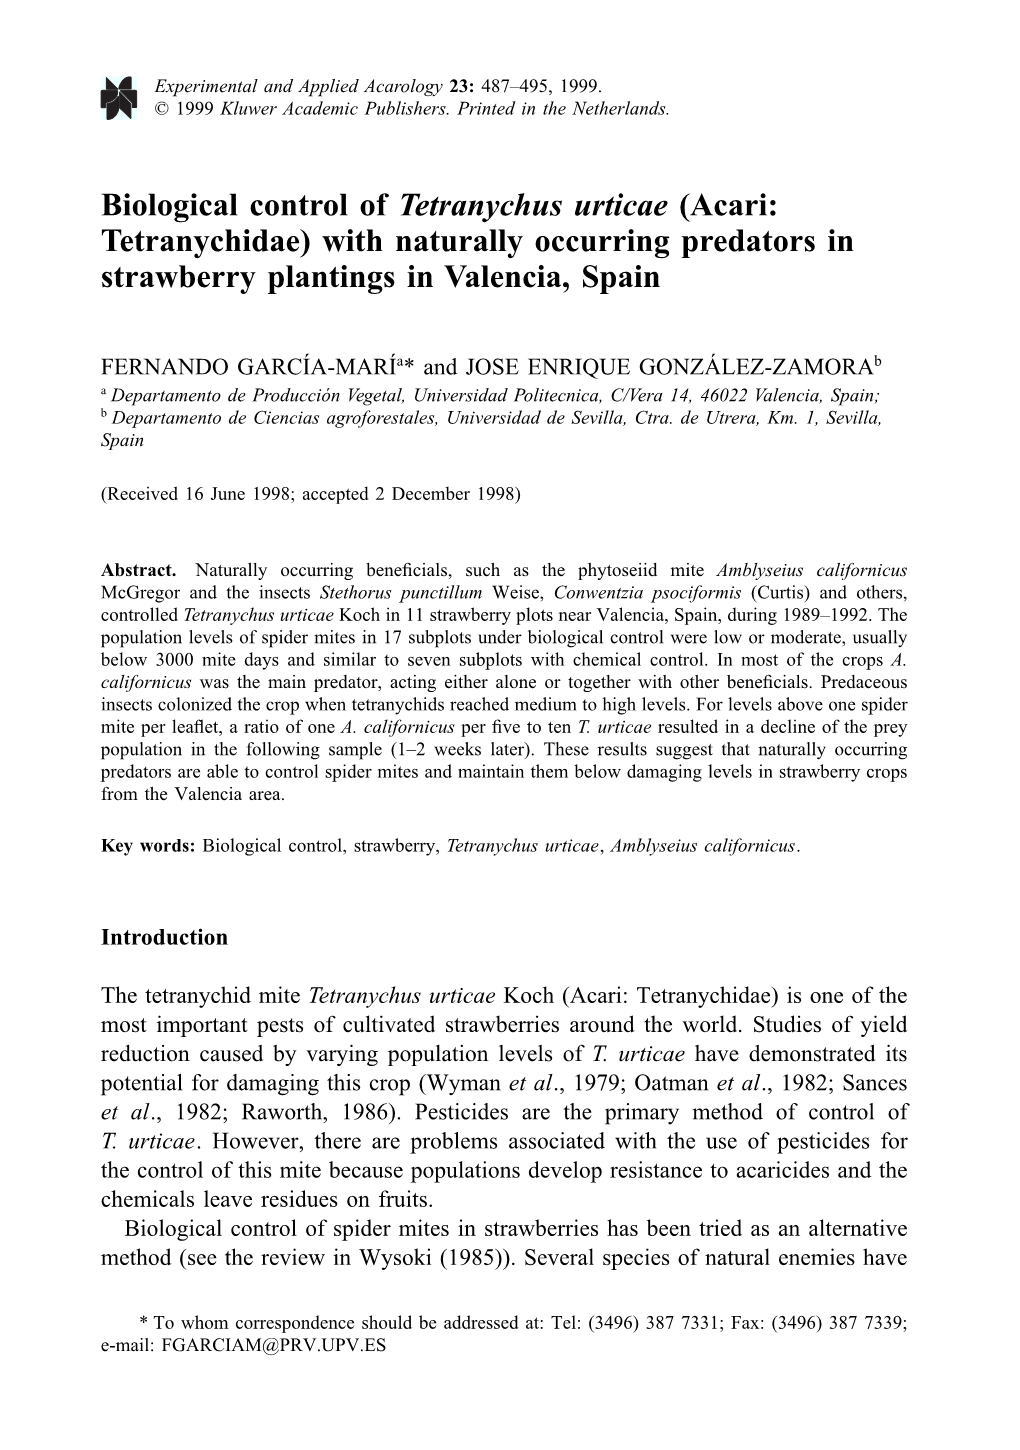 Biological Control of Tetranychus Urticae (Acari: Tetranychidae) with Naturally Occurring Predators in Strawberry Plantings in Valencia, Spain